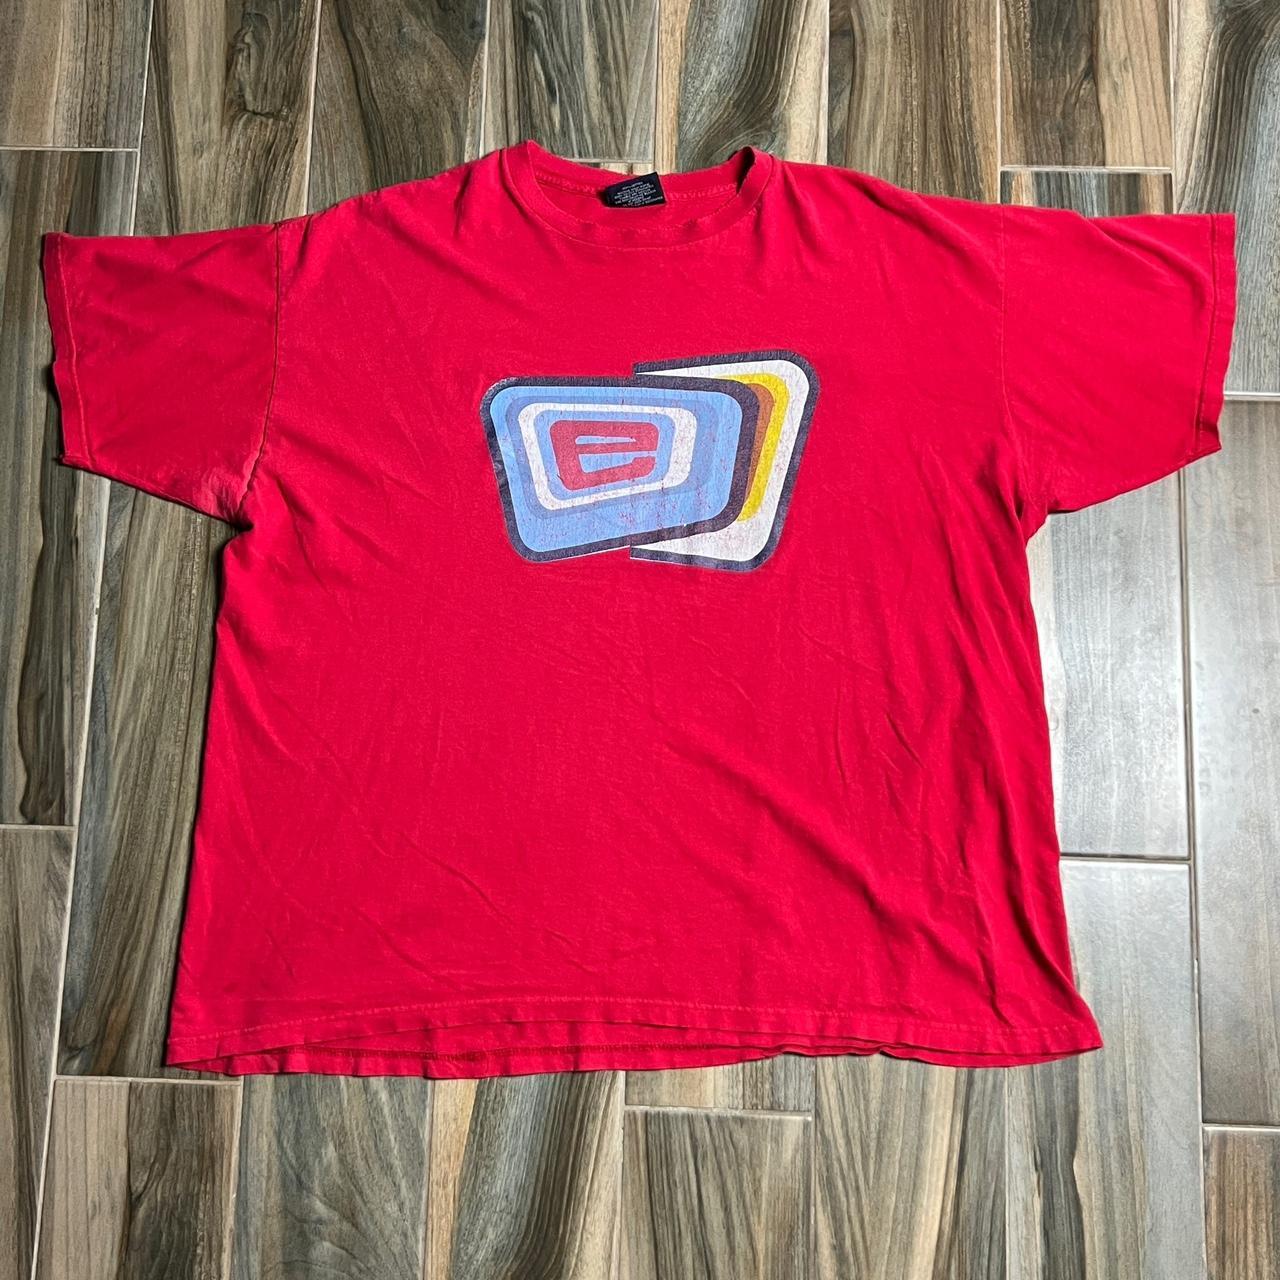 90s Enyce Skater Jnco Type T-Shirt Good Conditon,... - Depop